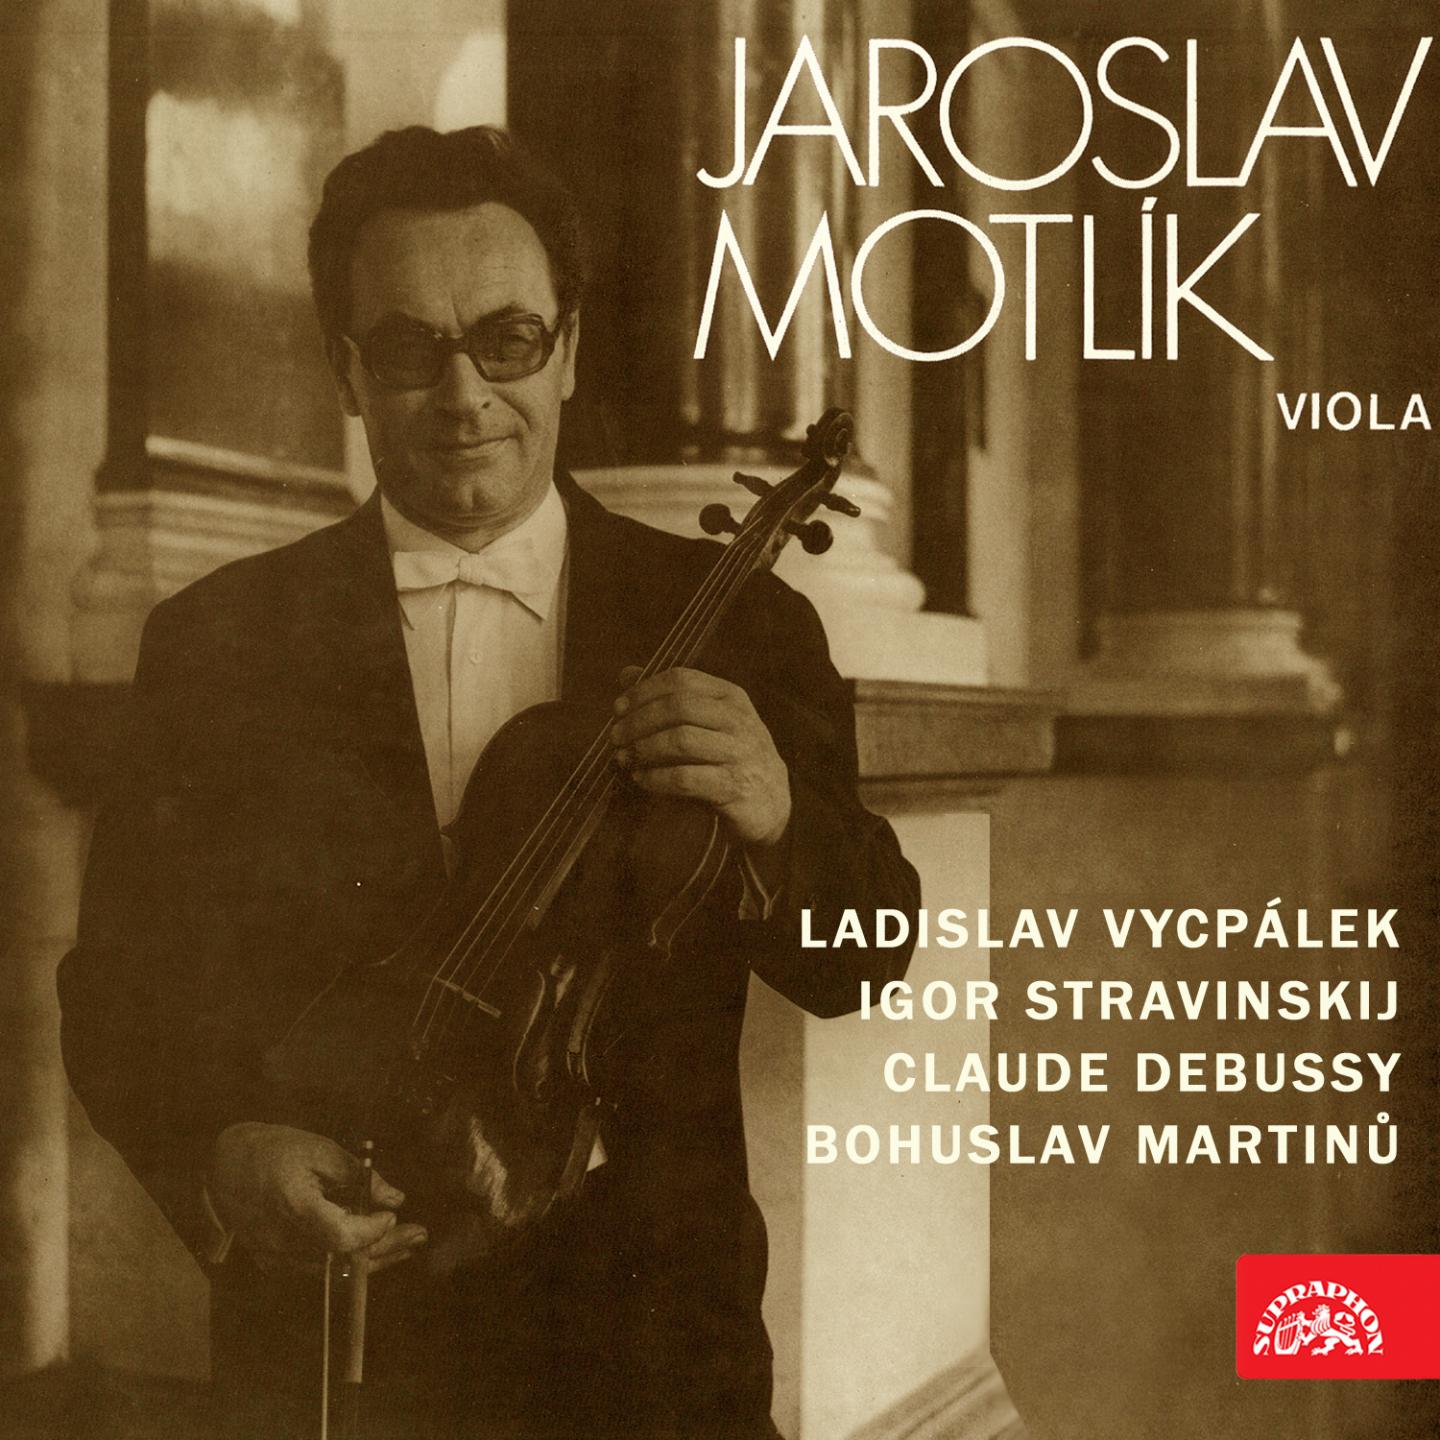 Debussy, Martin, Stravinsky, Vycpa lek: Jaroslav Motli k